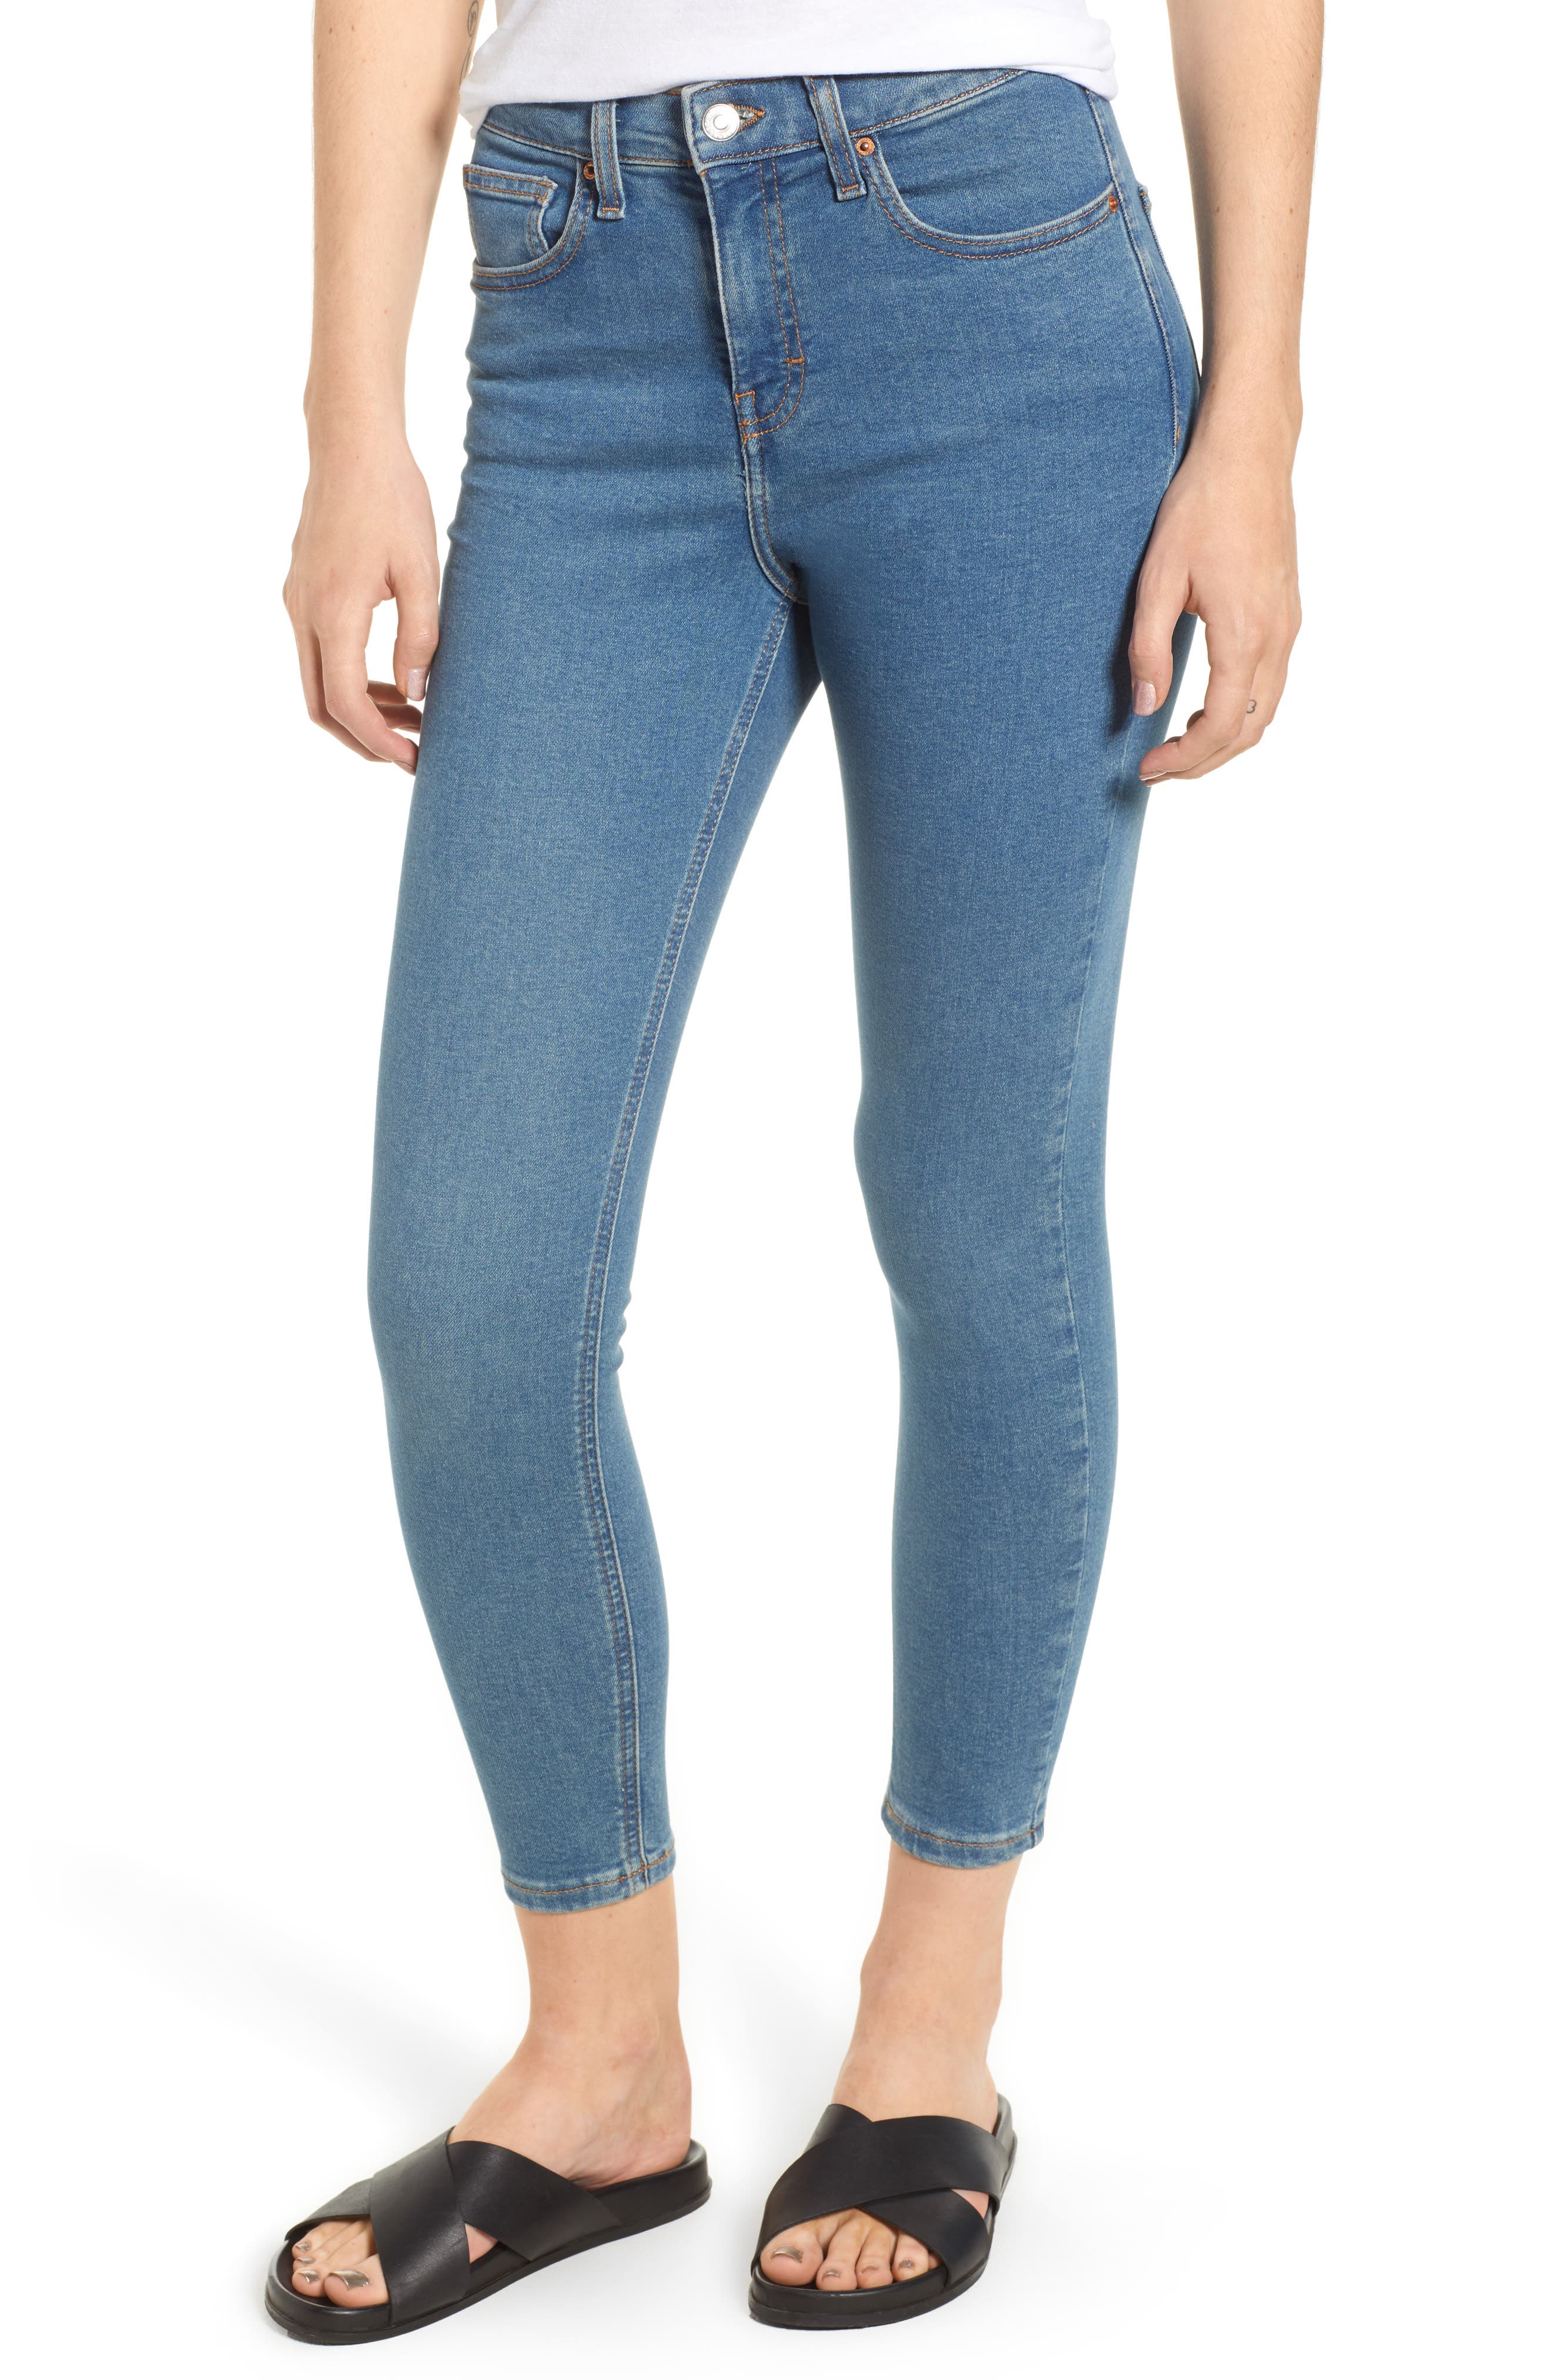 topshop jamie jeans canada